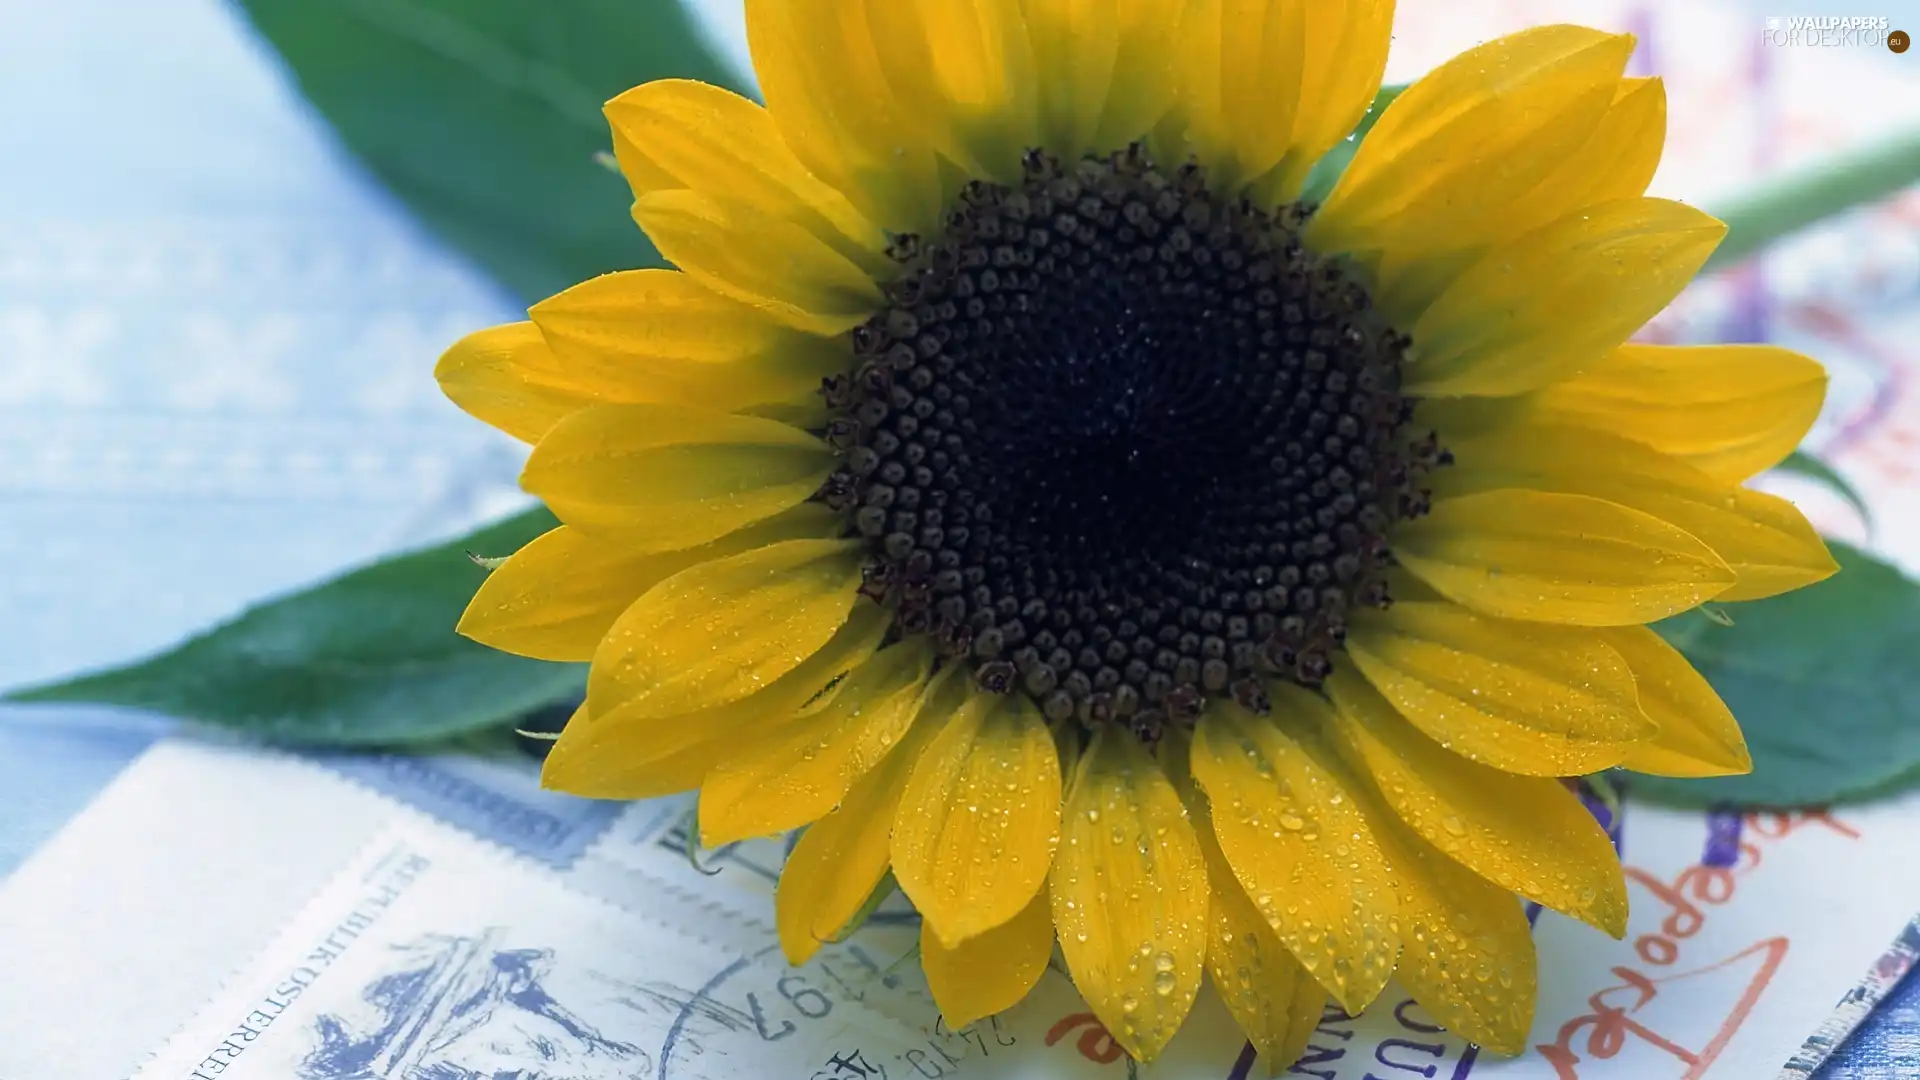 Sunflower, addressed, Envelopes, decorated